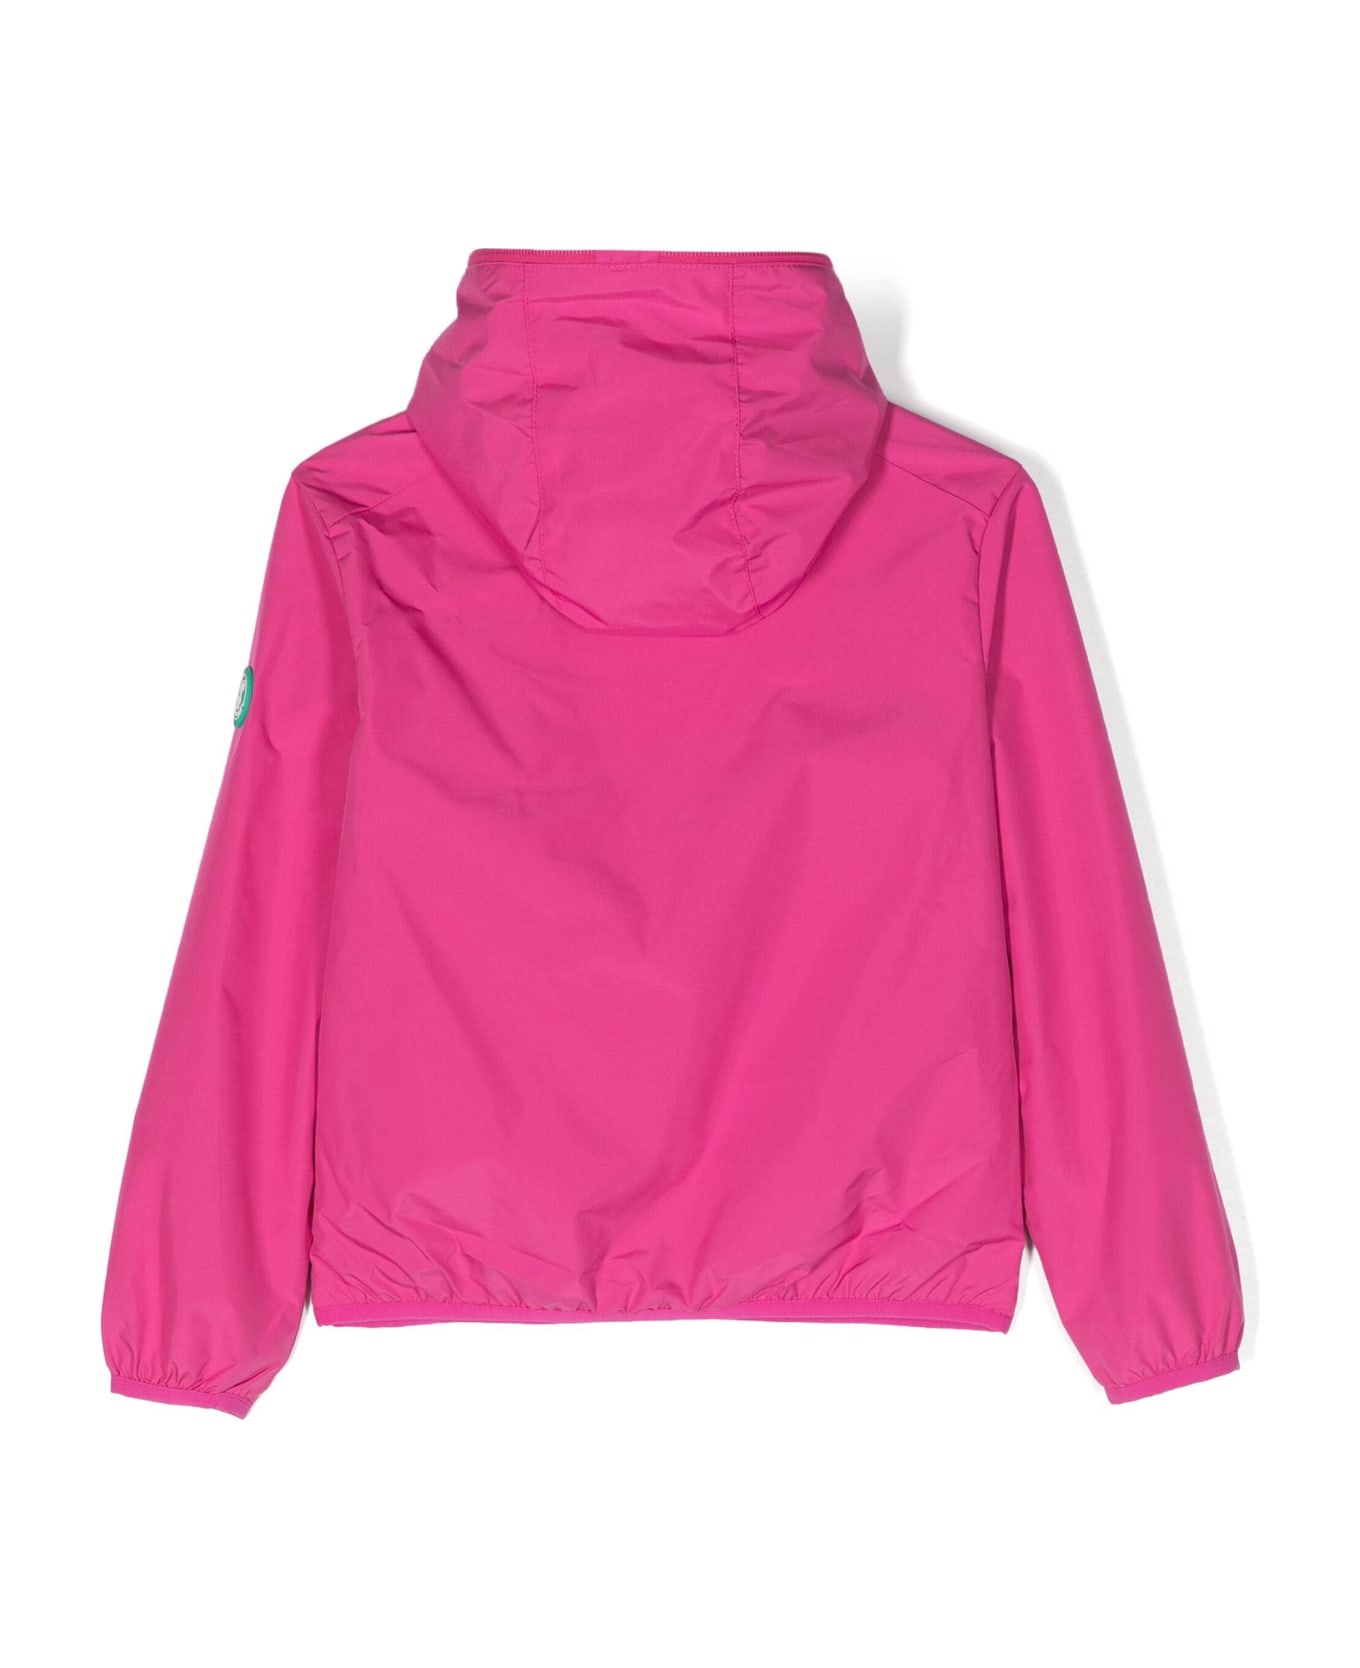 Save the Duck Hooded Windbreaker Jacket In Fuchsia - Pink